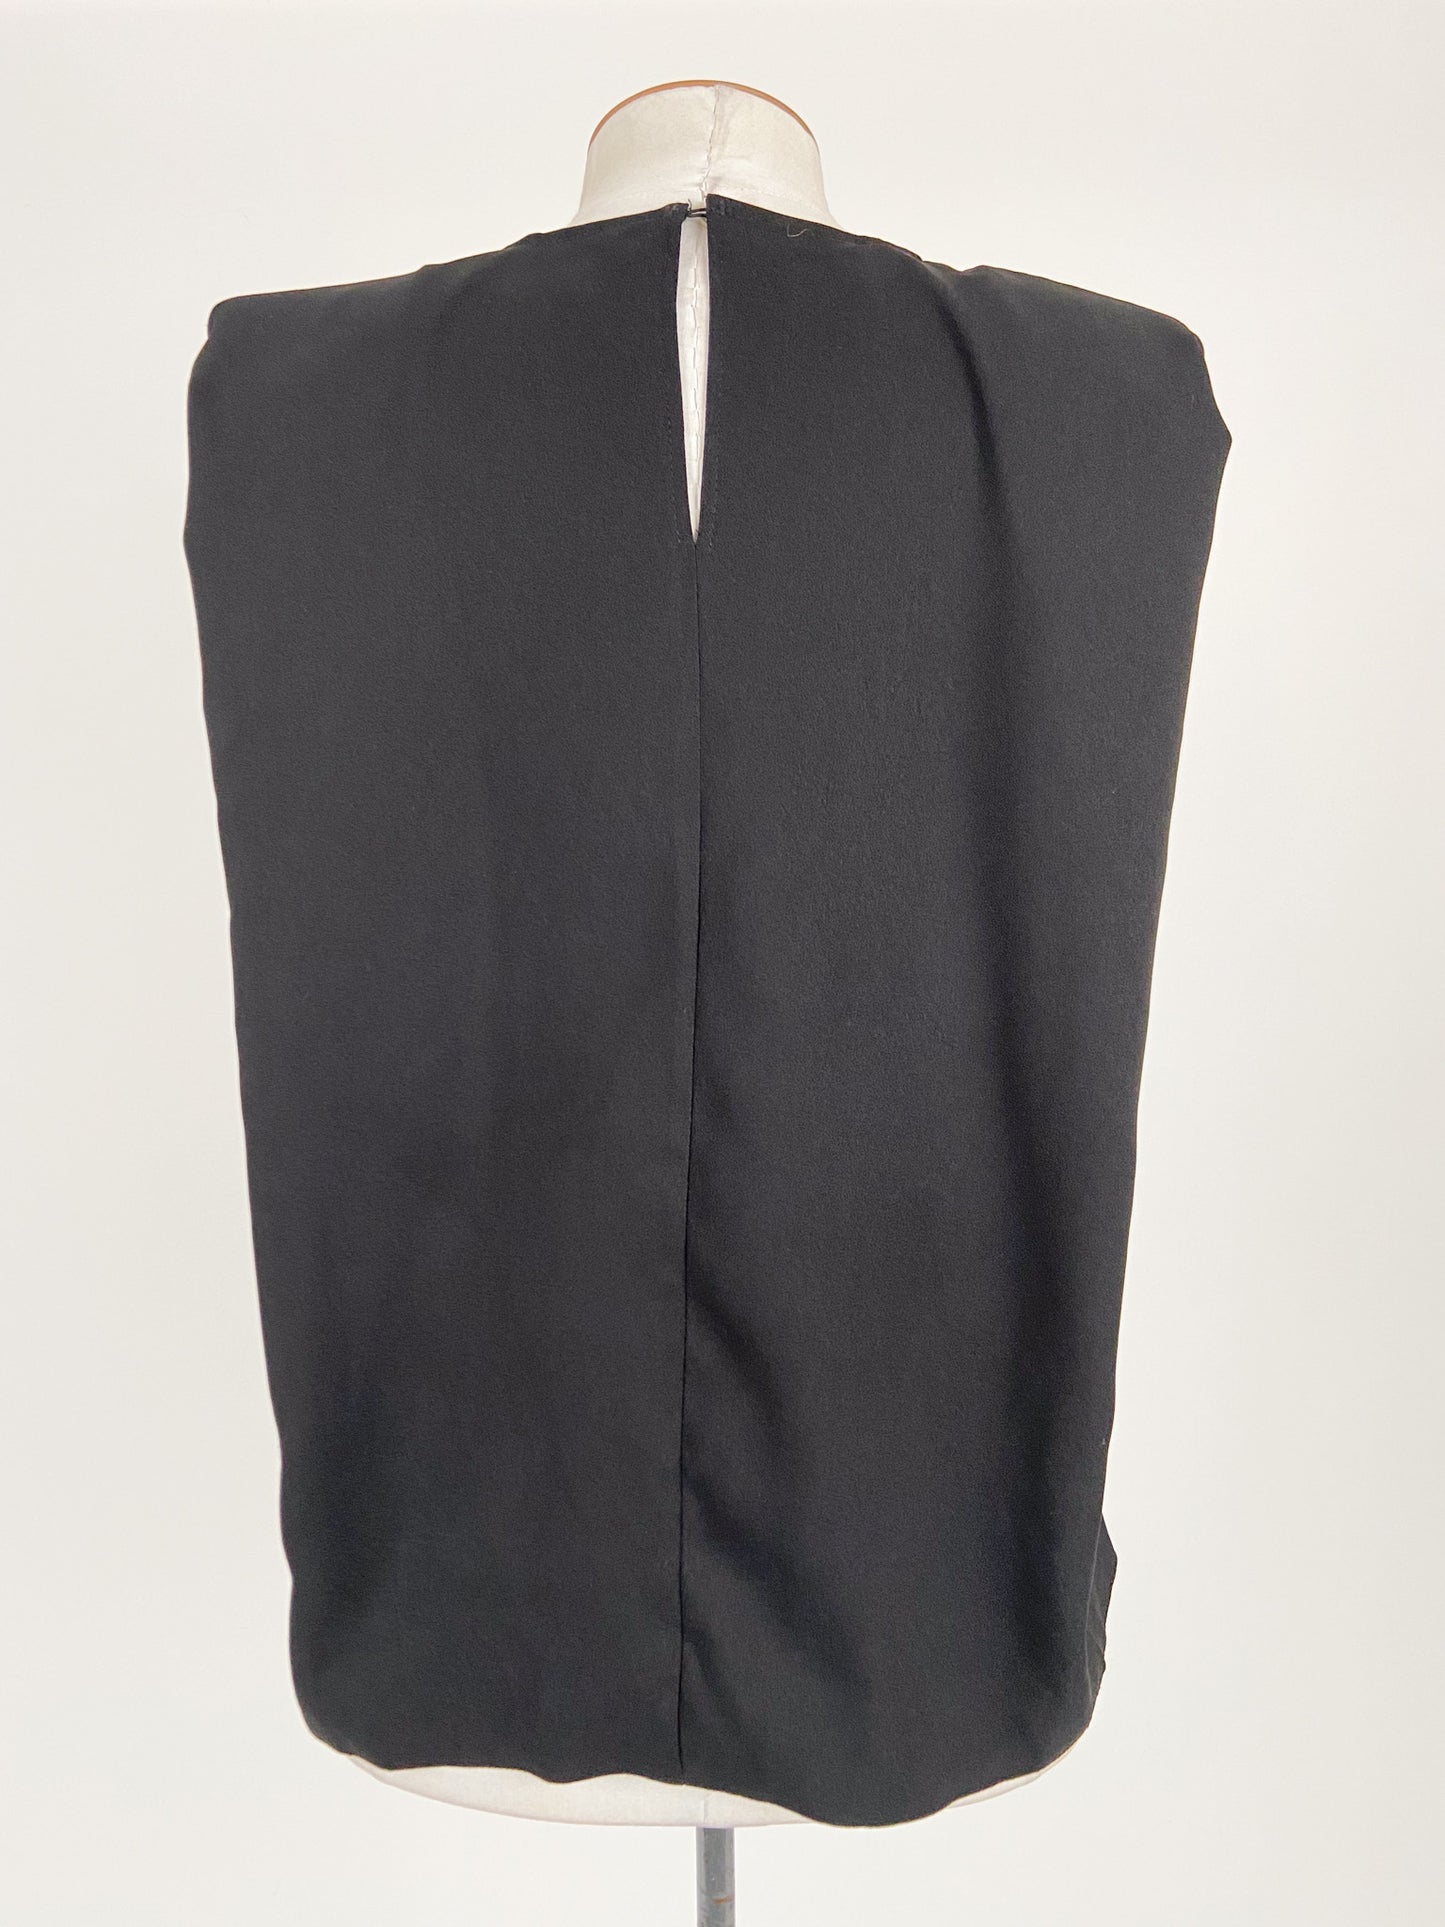 ASOS | Black Casual/Workwear Top | Size 14